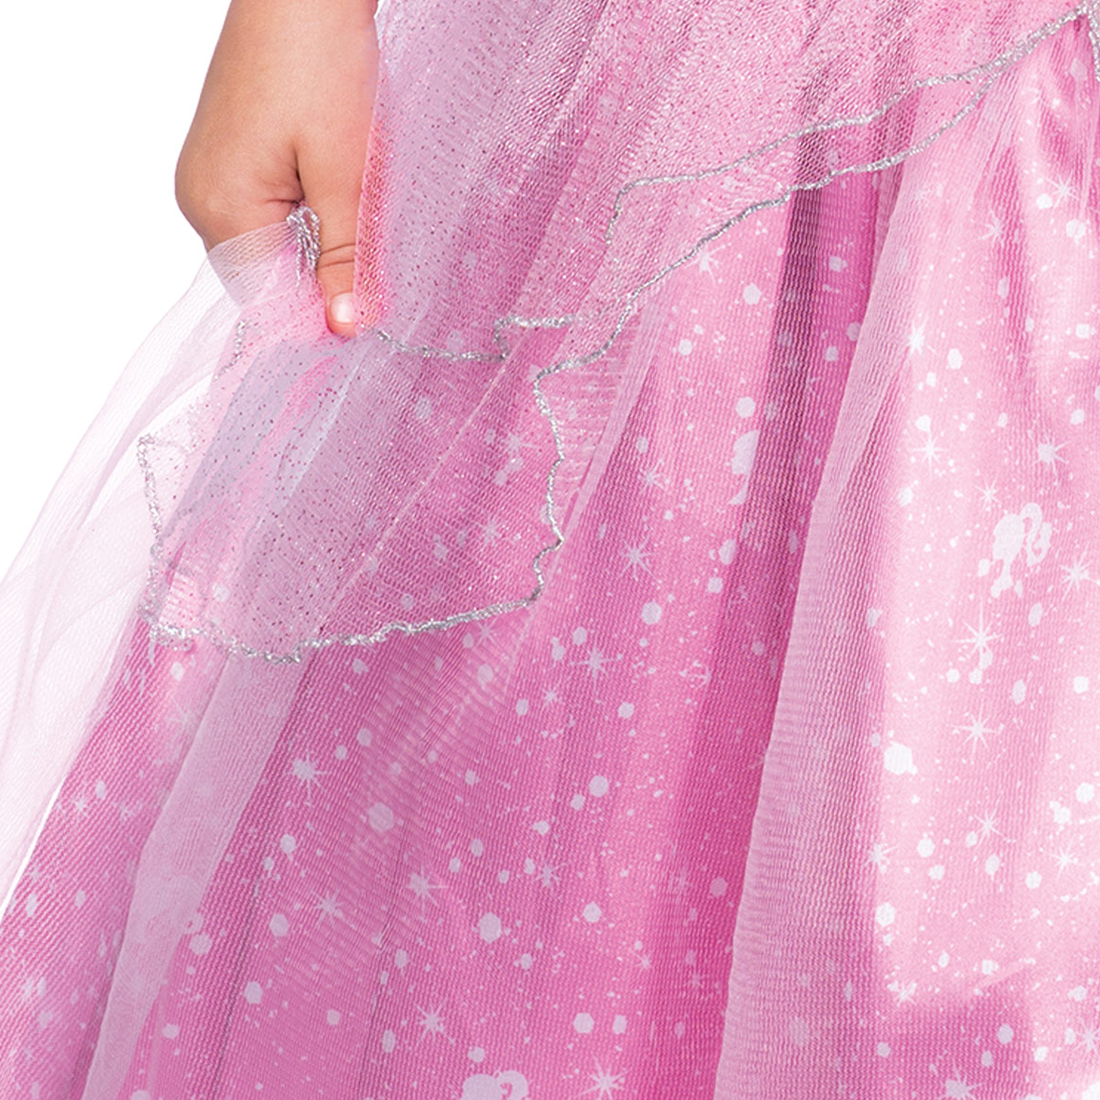 Barbie Sequin Princess Deluxe Pink Costume 4-6 Years